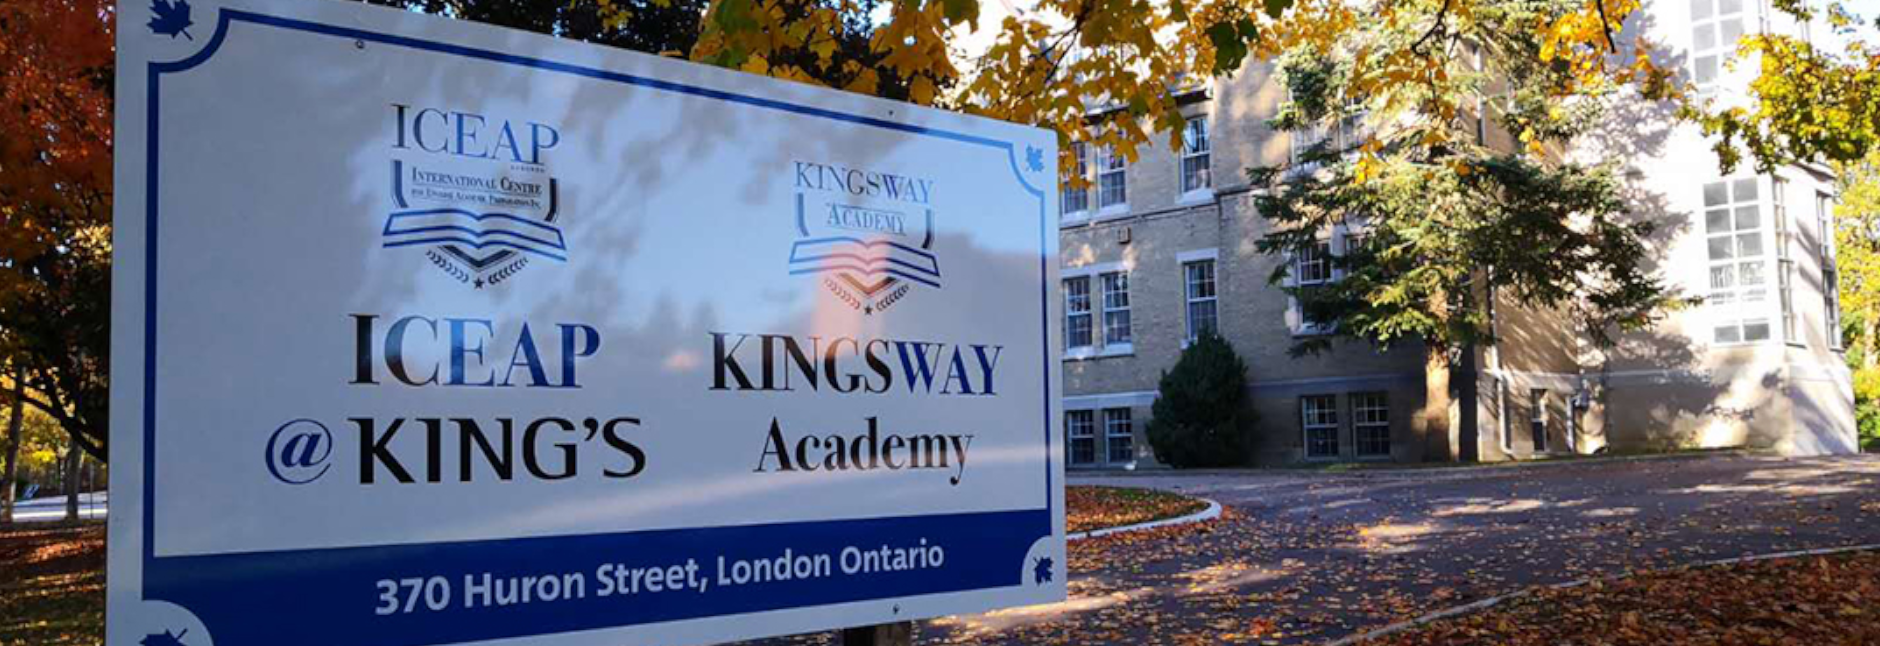 kingsway-academy-canada-seeks-education-agents-partnerships